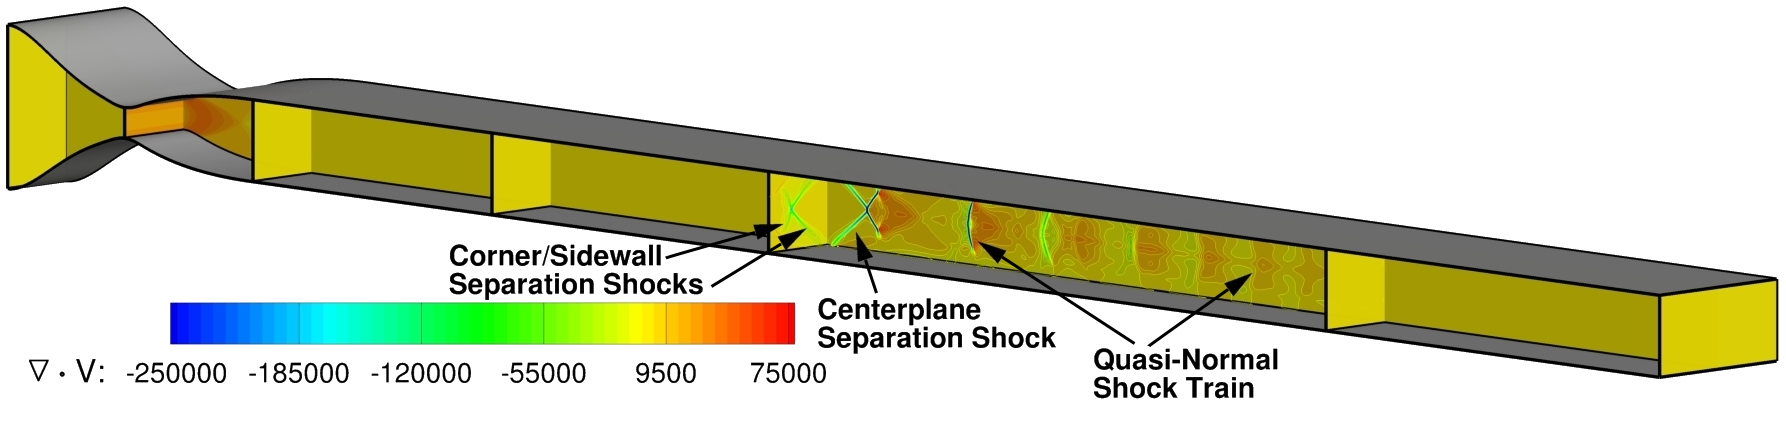 Isolator shock system visualization via the velocity divergence